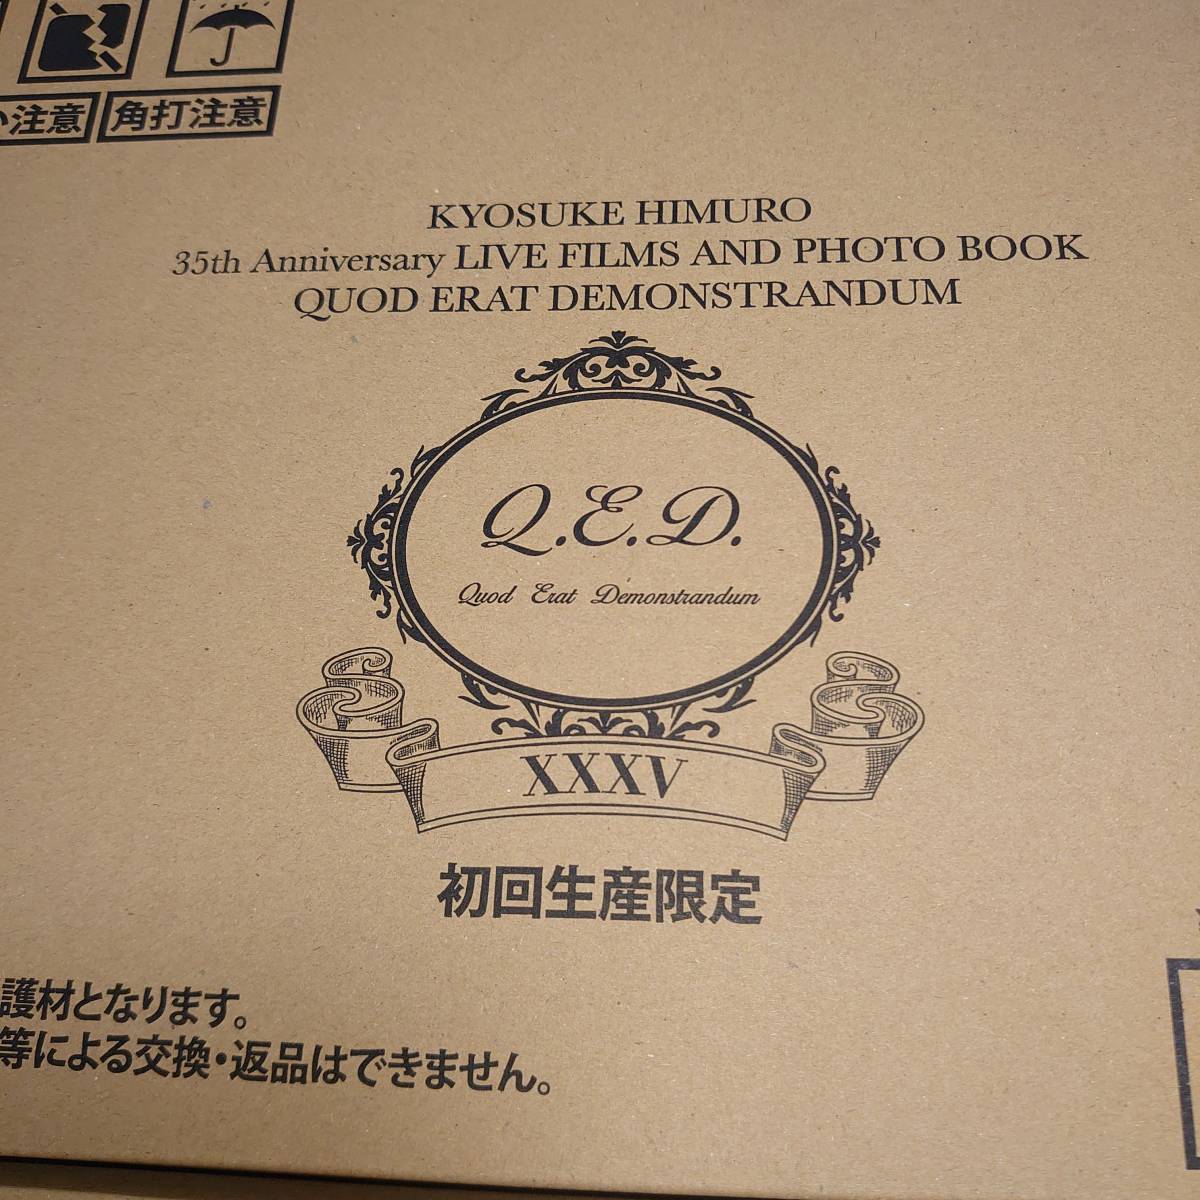 ＤＶＤ版 新品未開封品 FC限定特典付 氷室京介 KYOSUKE HIMURO 35th ANNIVERSARY LIVE FILMS AND PHOTO BOOK QUOD ERAT DEMONSTRANDNM の画像2